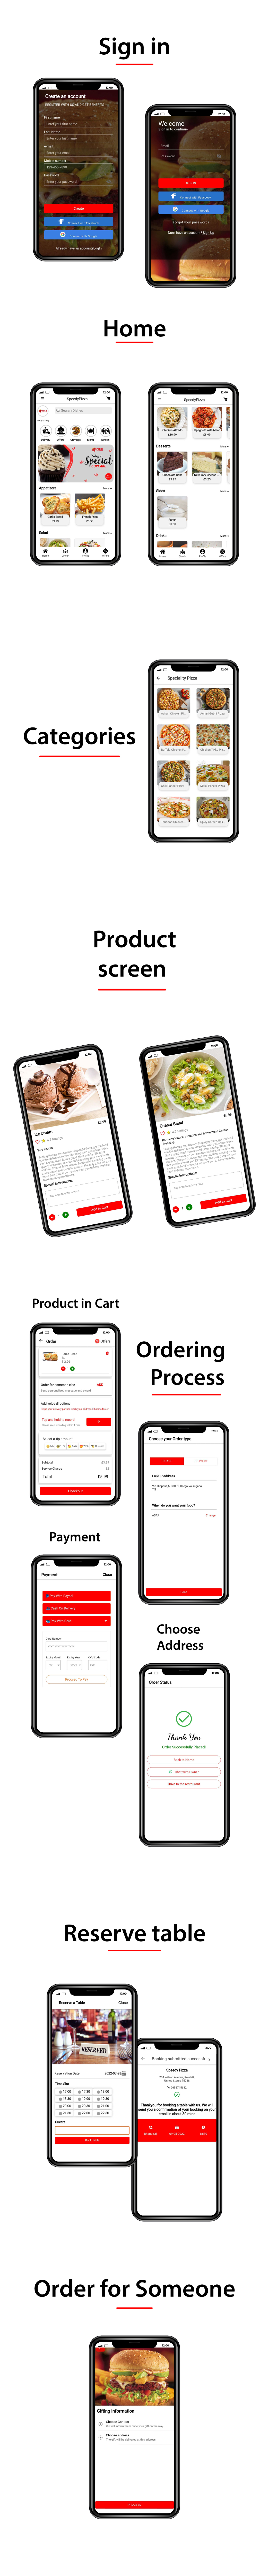 ionic 3 single restaurant food ordering app - 1